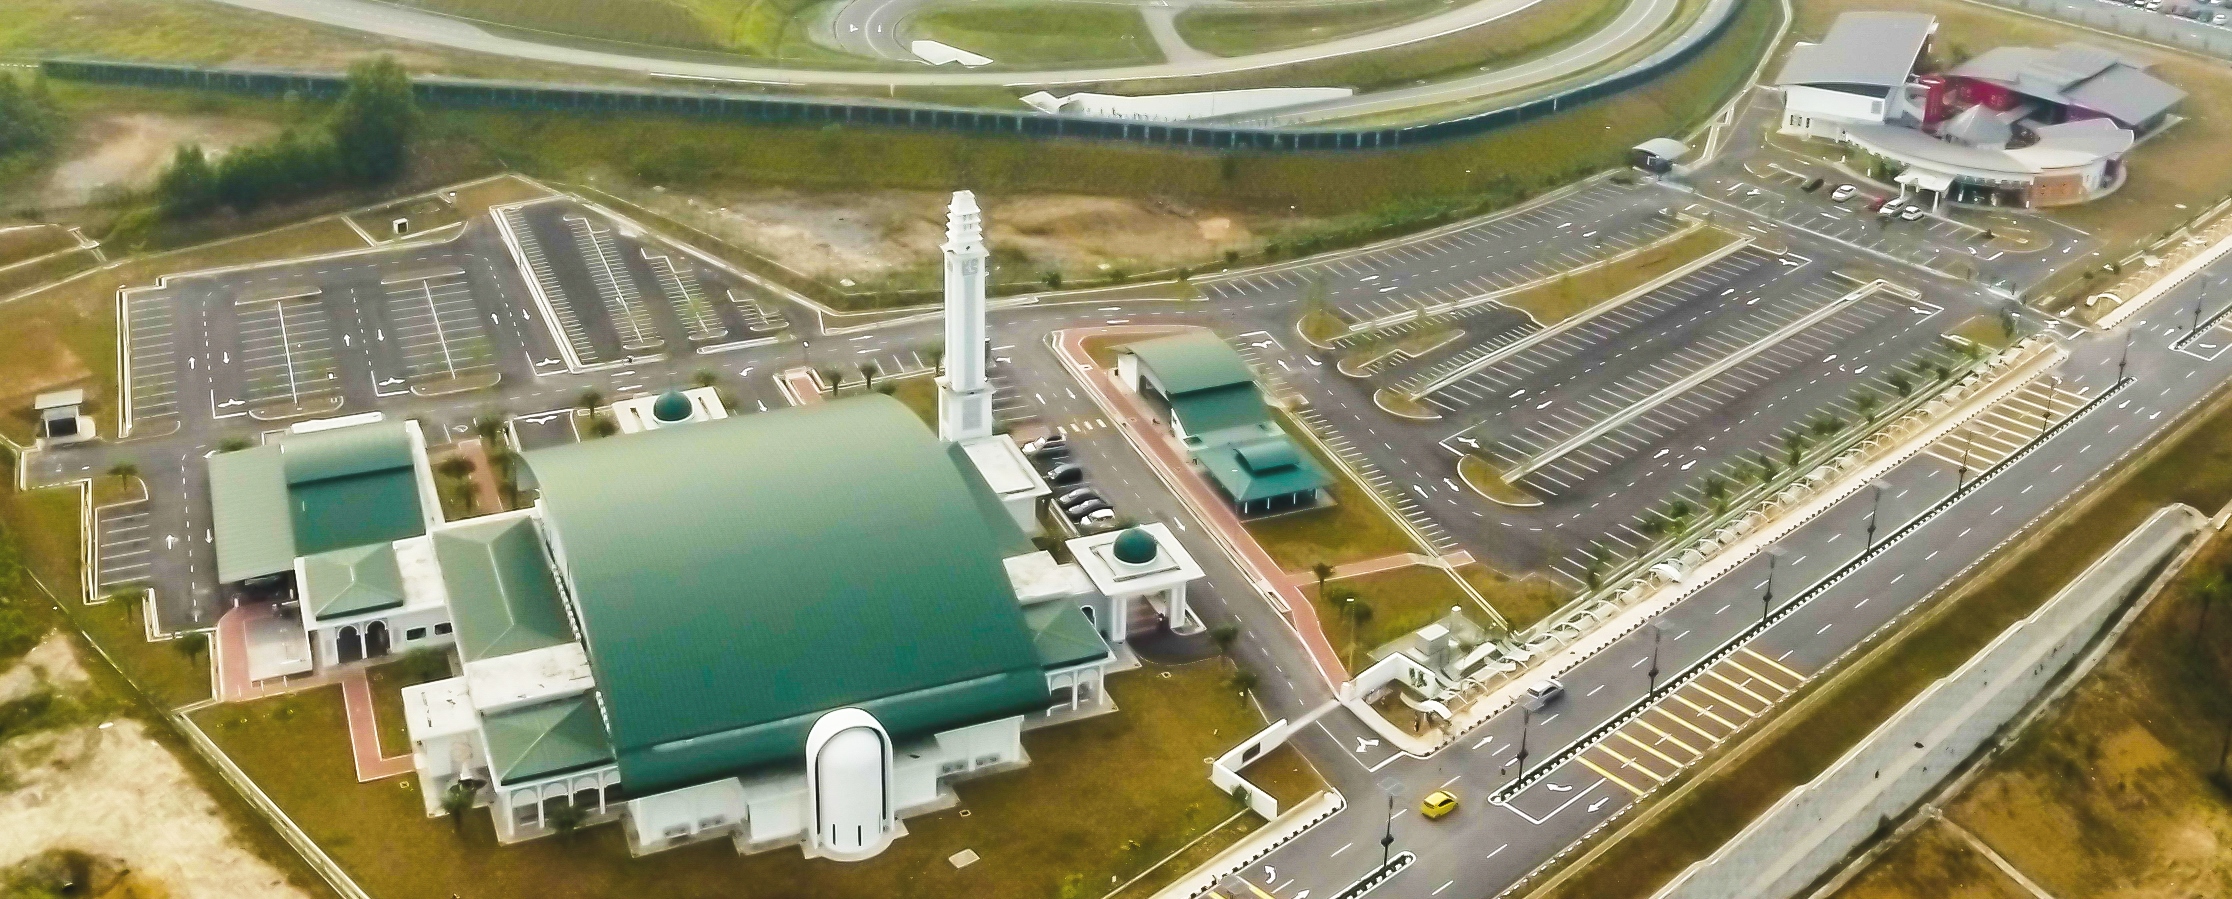 Masjid Perodua aerial view